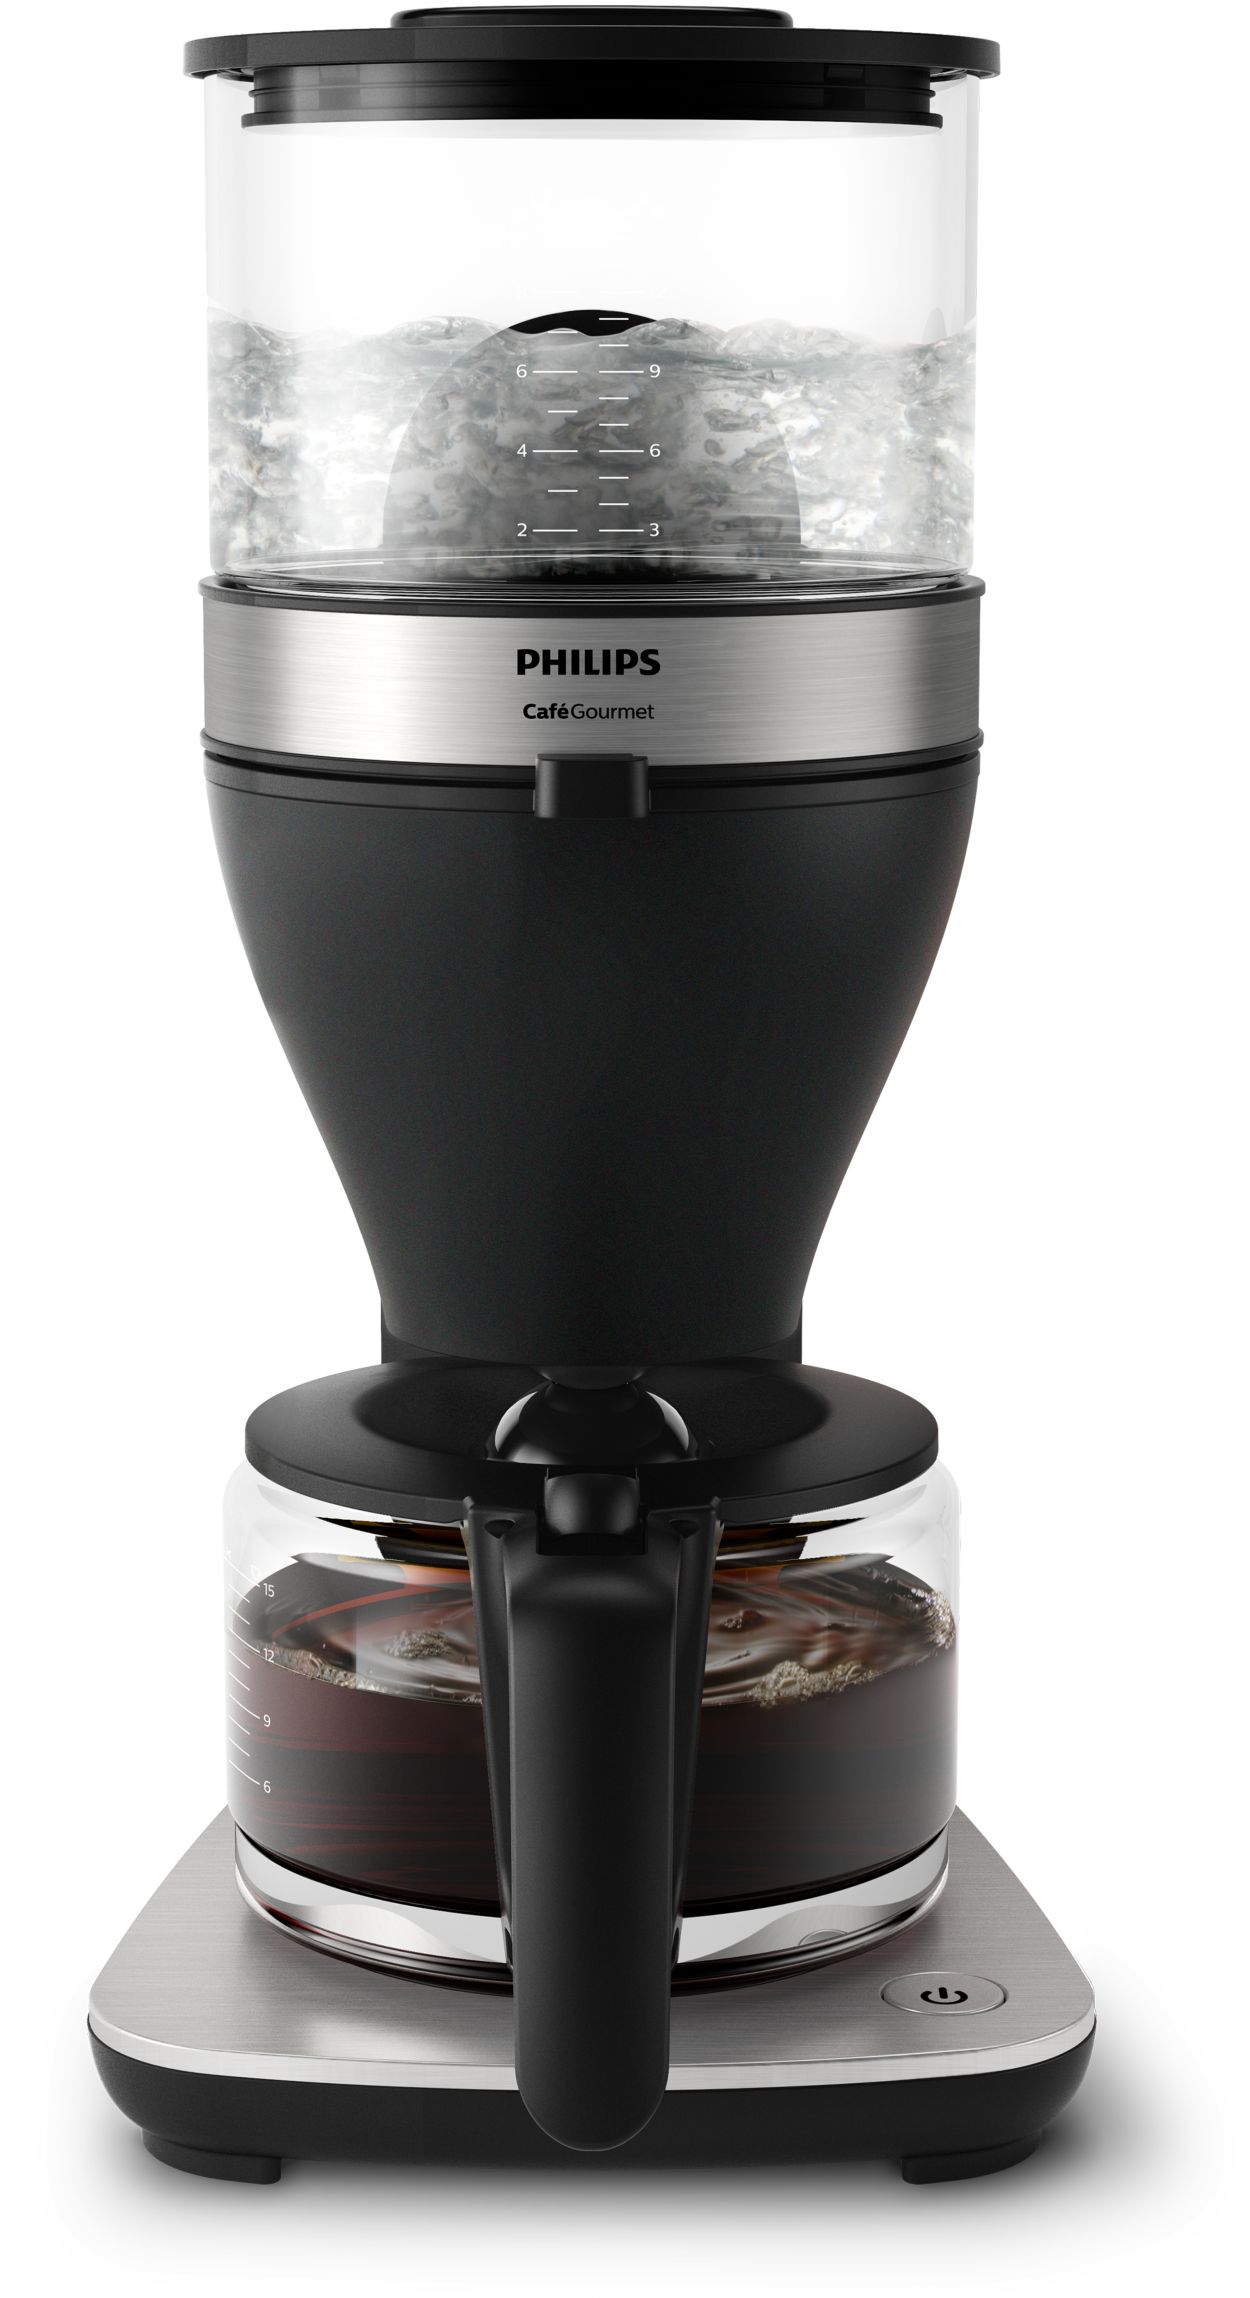 Cafe' Gourmet Drip Filter Coffee Machine HD5416/00